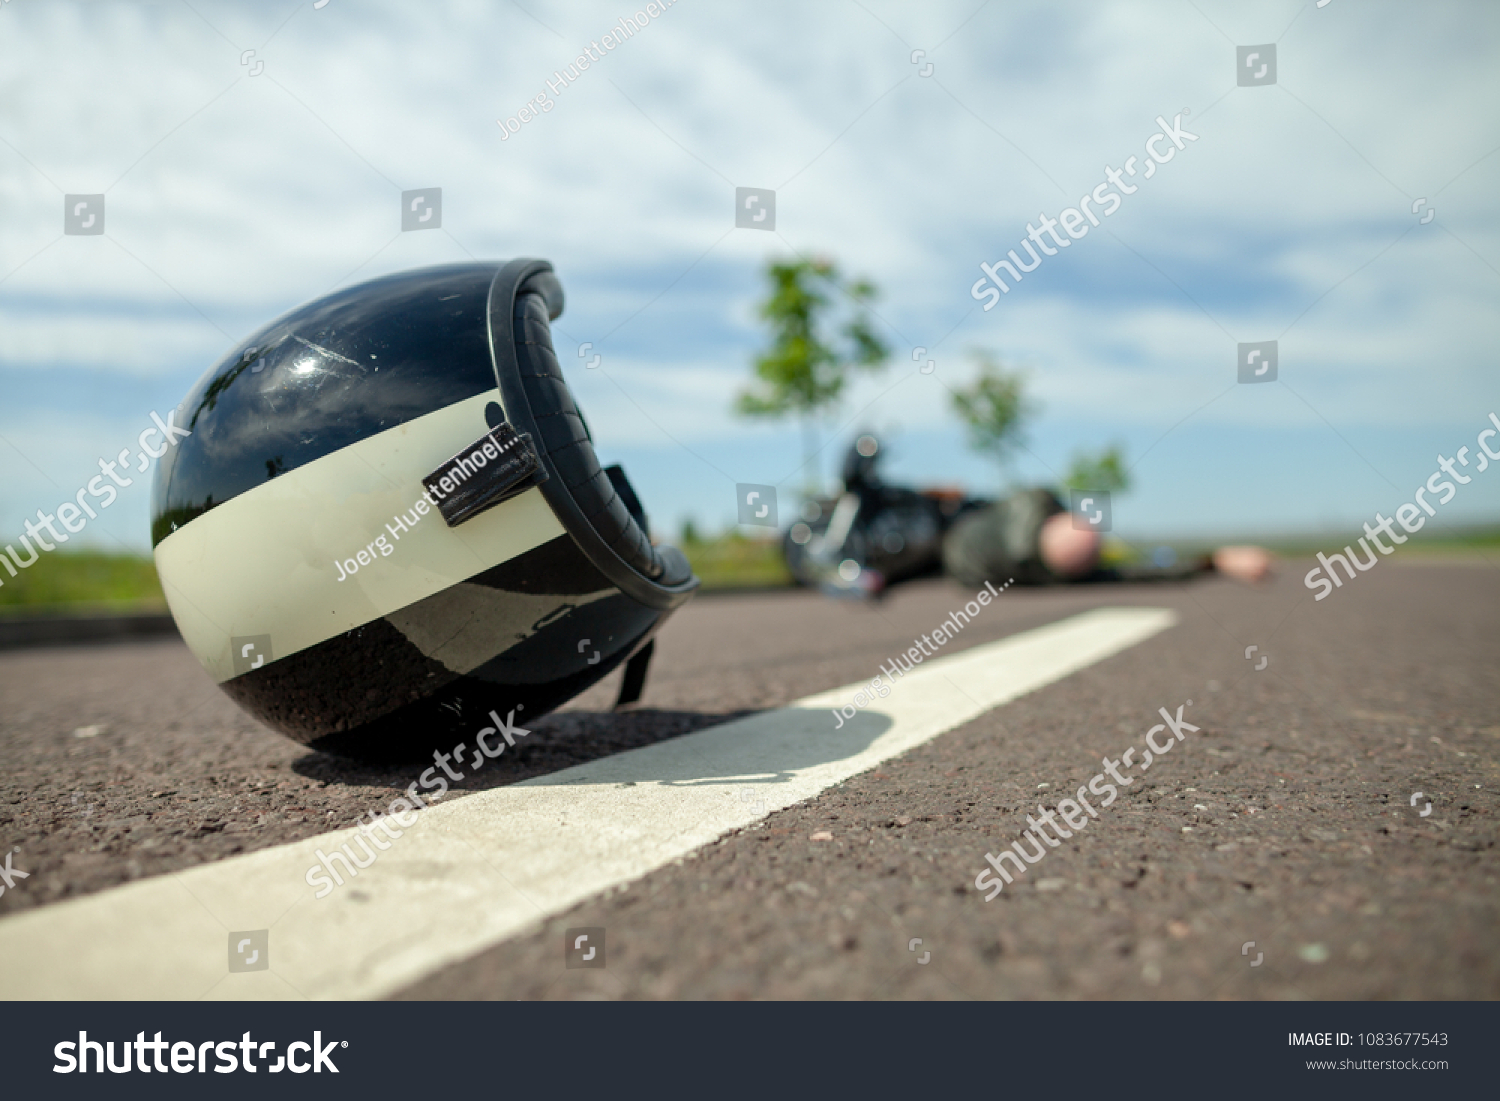 biker helmet lies on street near a motorcycle accident #1083677543